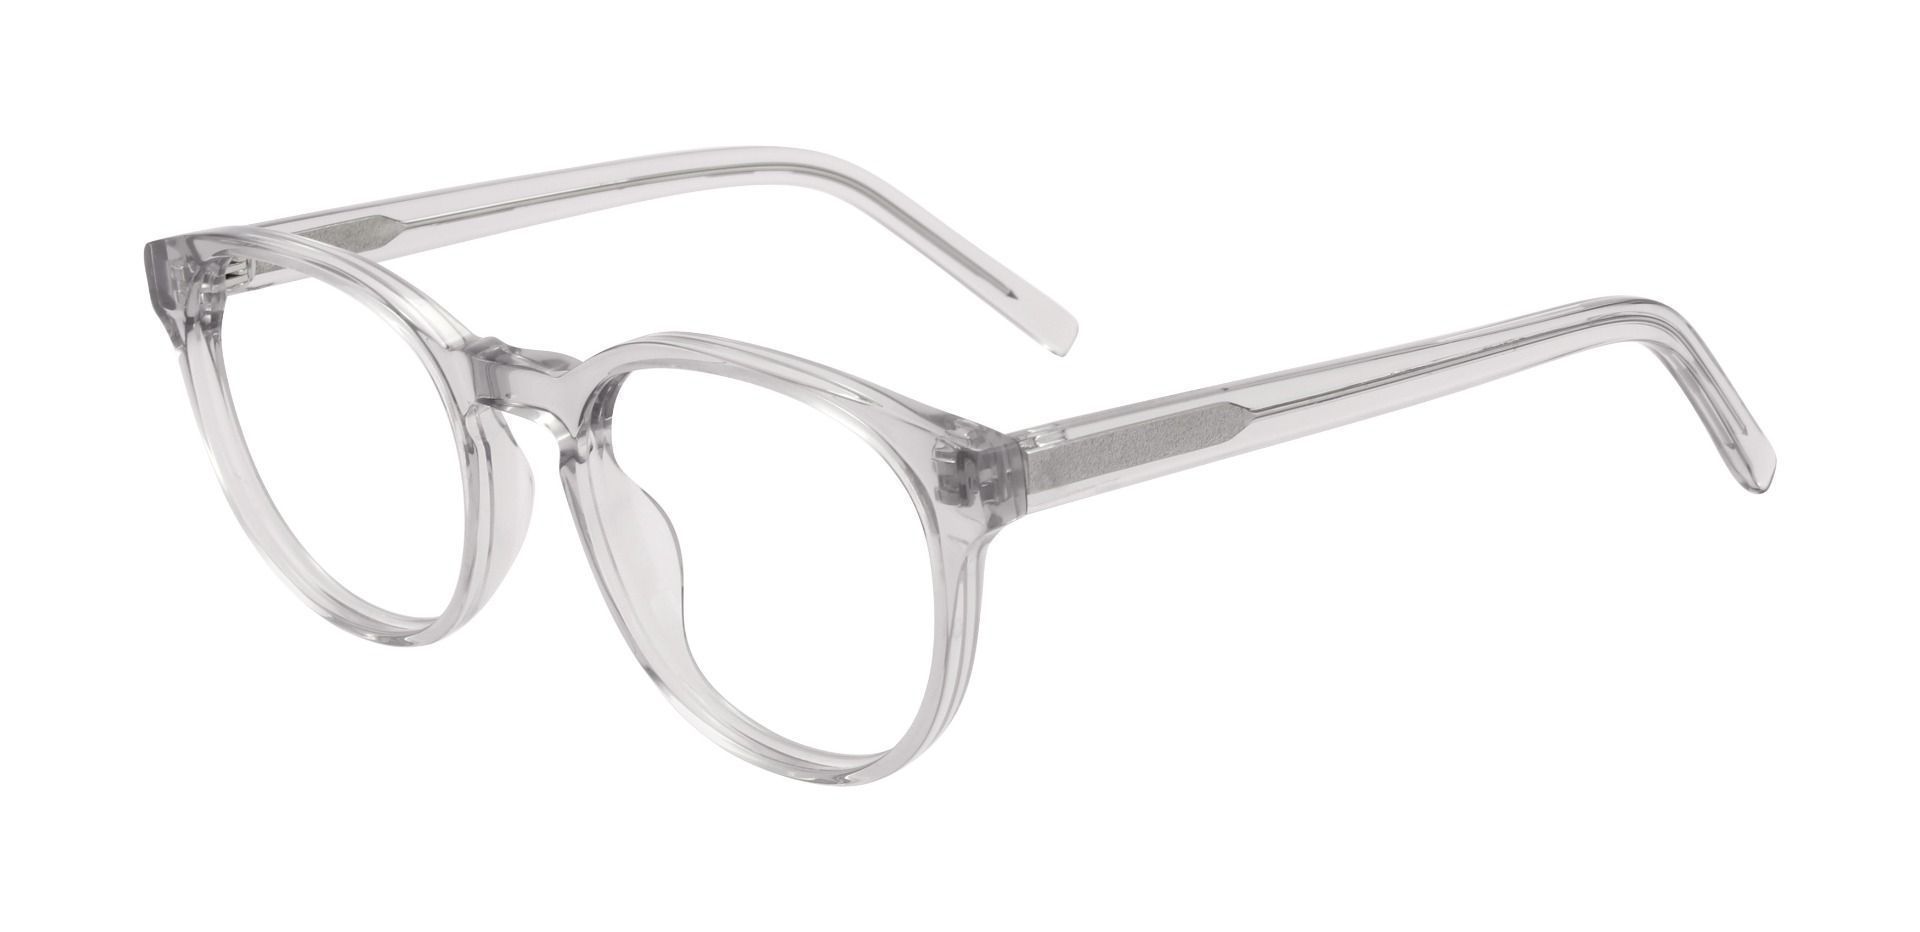 Wayland Oval Prescription Glasses - Clear